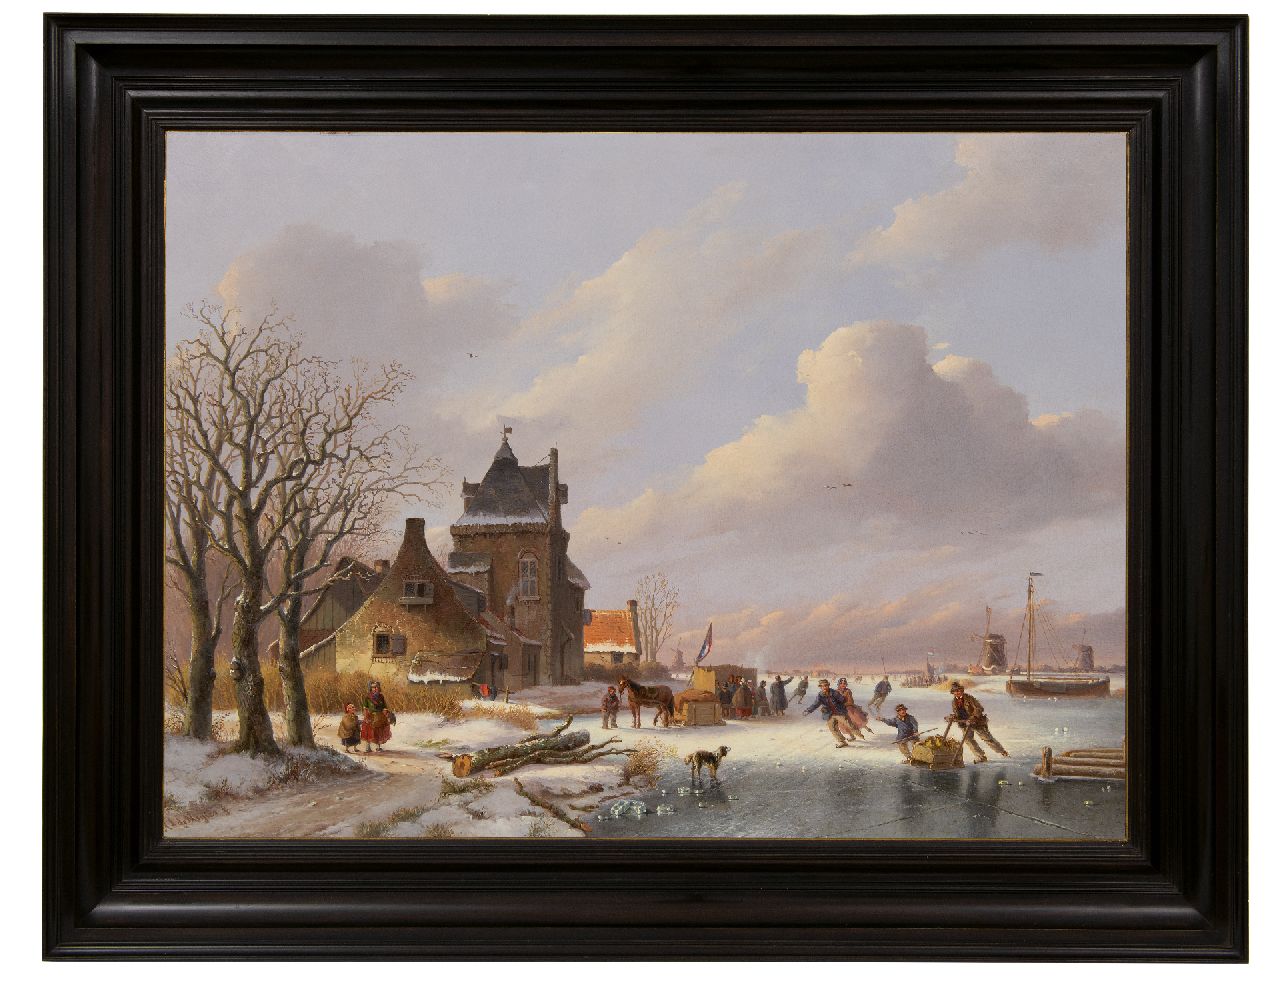 Meijier A.A. de | Anthony Andreas de Meijier, A winter landscape with skaters and a koek-en-zopie, oil on panel 53.5 x 72.9 cm, signed l.l.